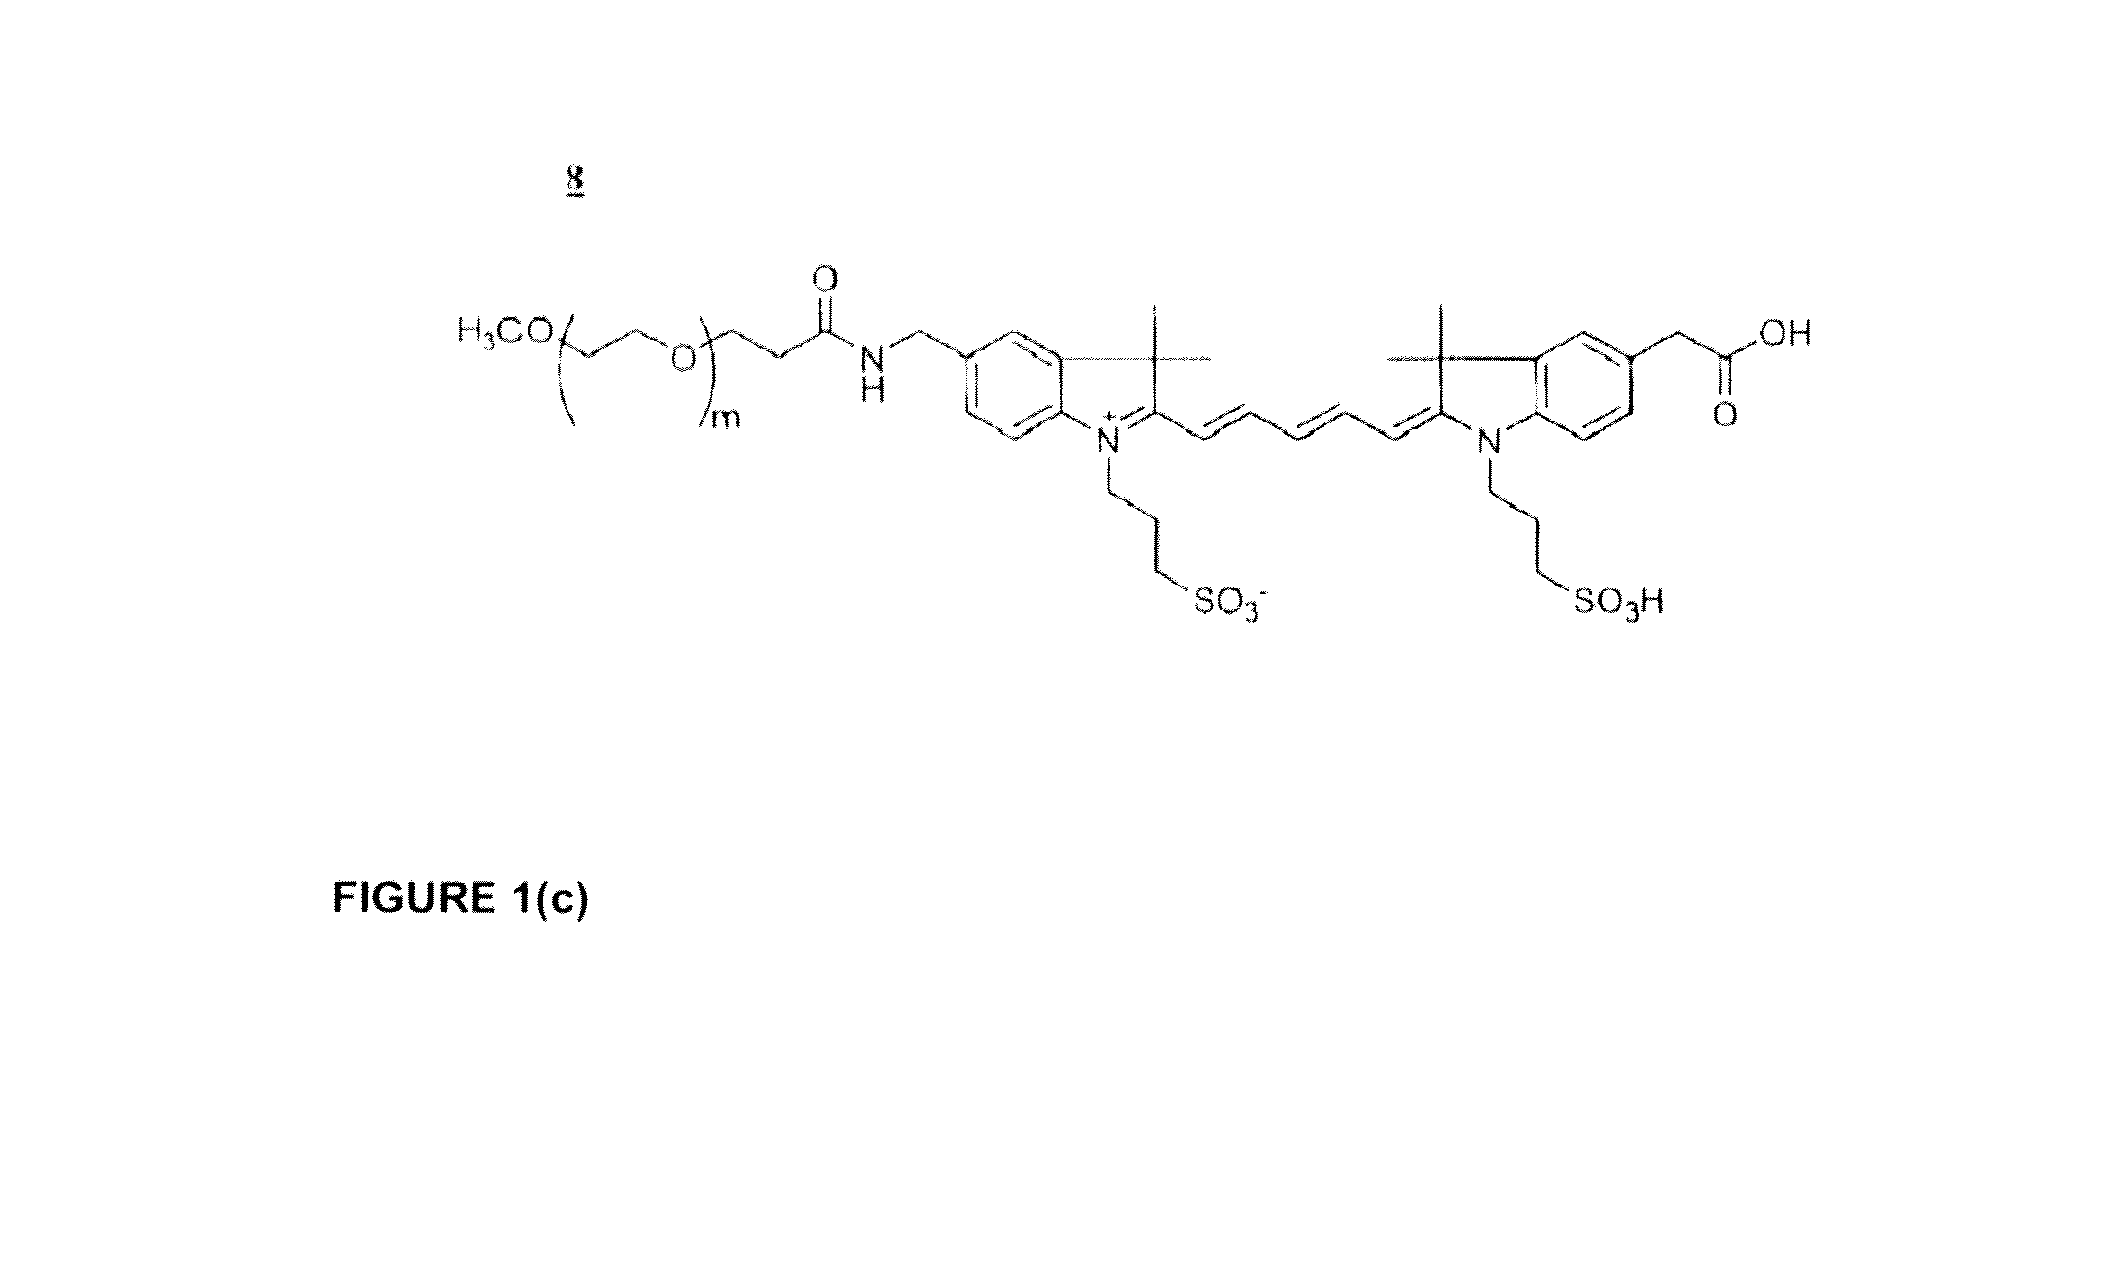 Phospholinked dye analogs with an amino acid linker